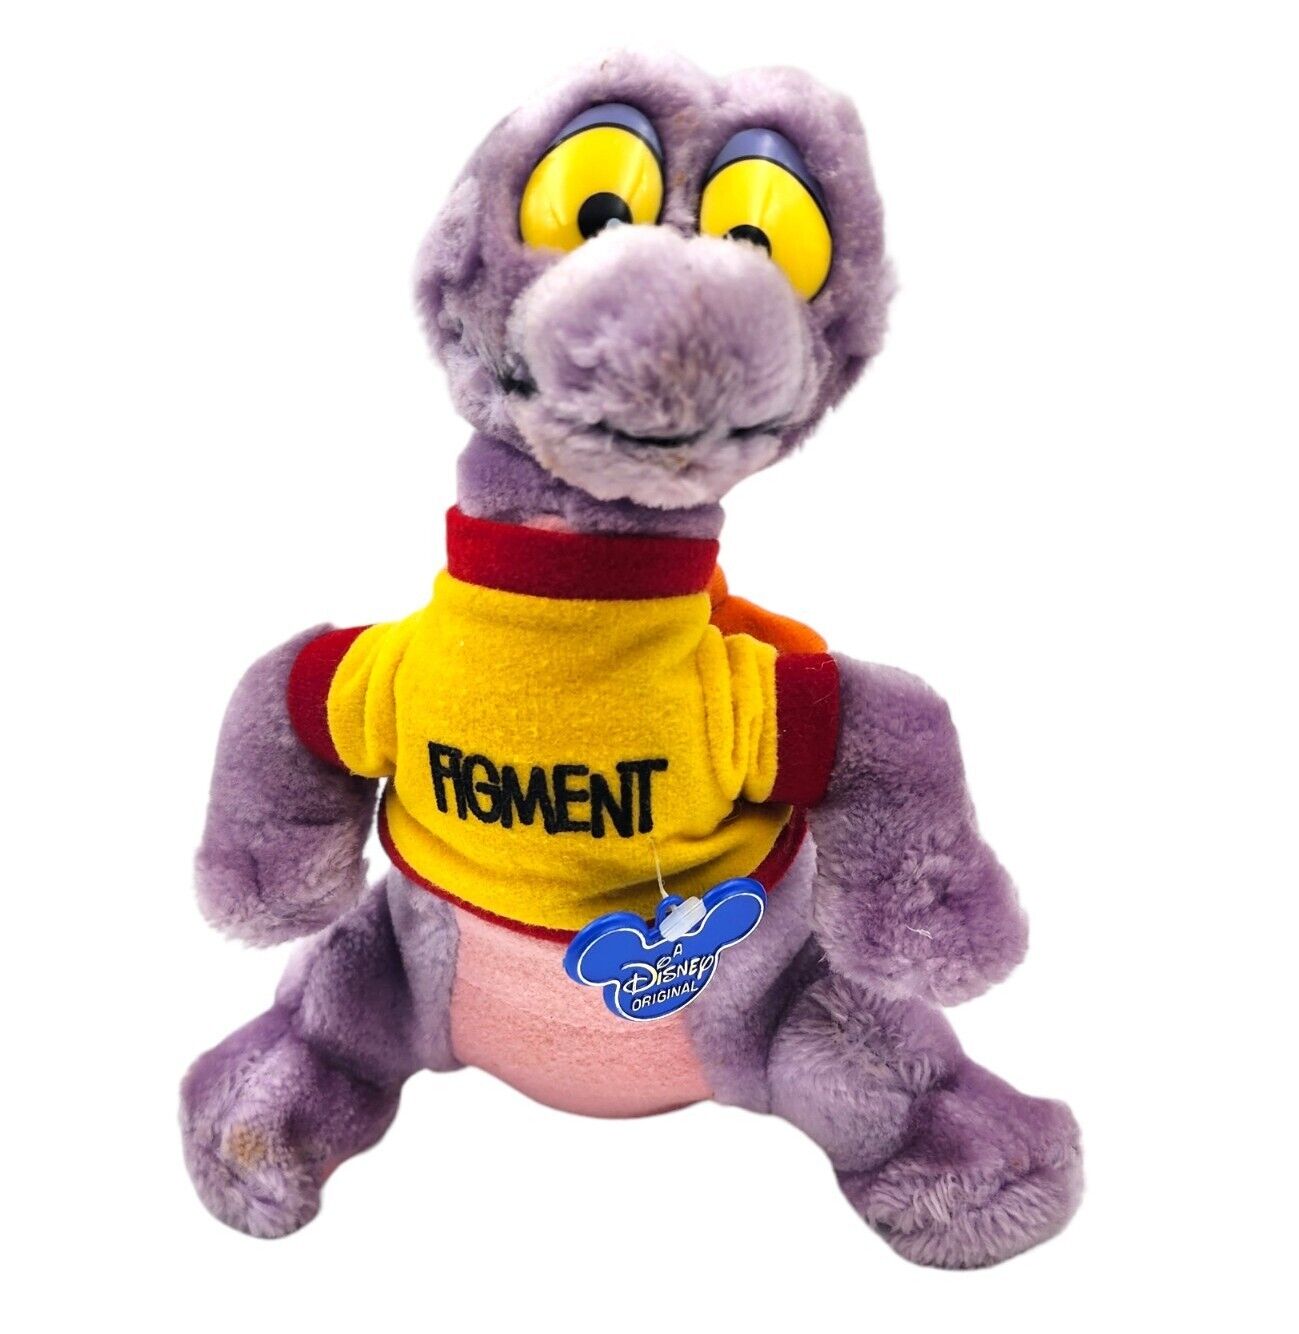 Vintage 1982 Figment Purple Dragon Disneyland Plush Stuffed Animal Original Tag